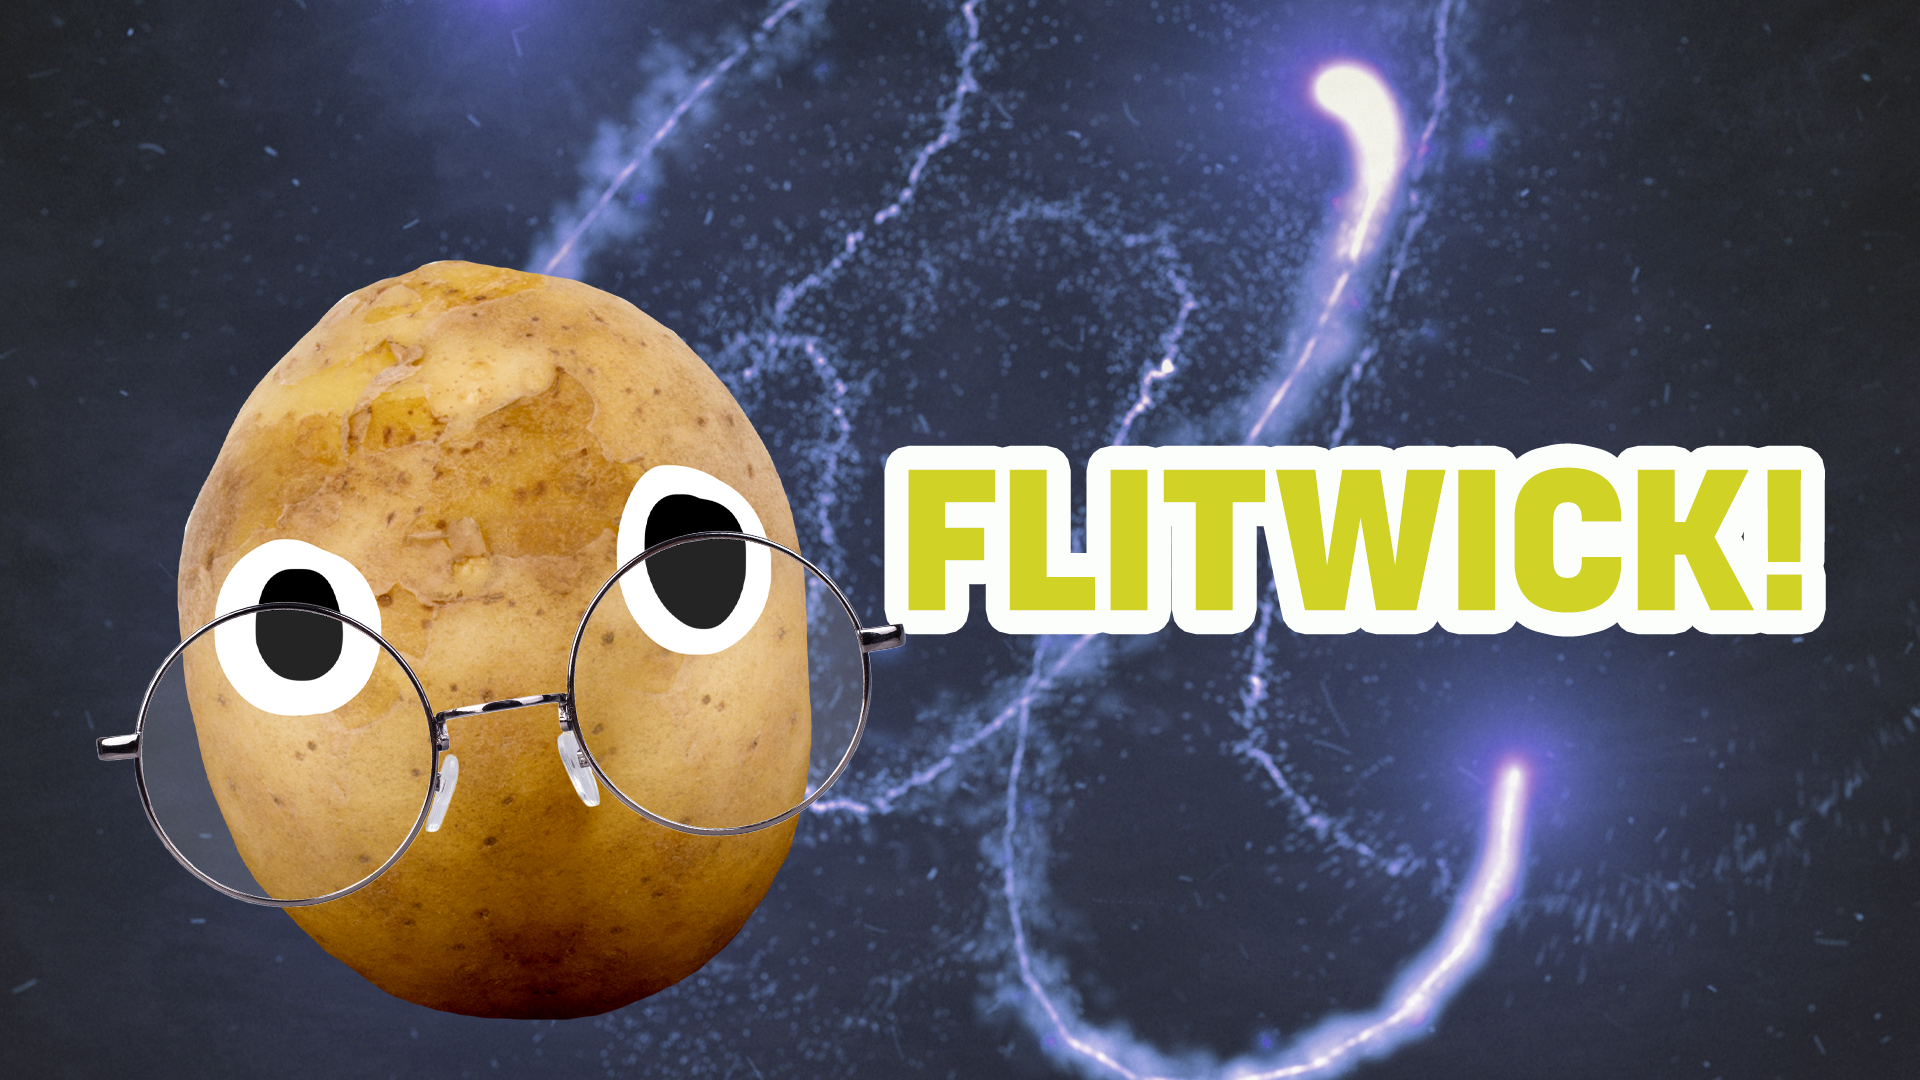 Flitwick result